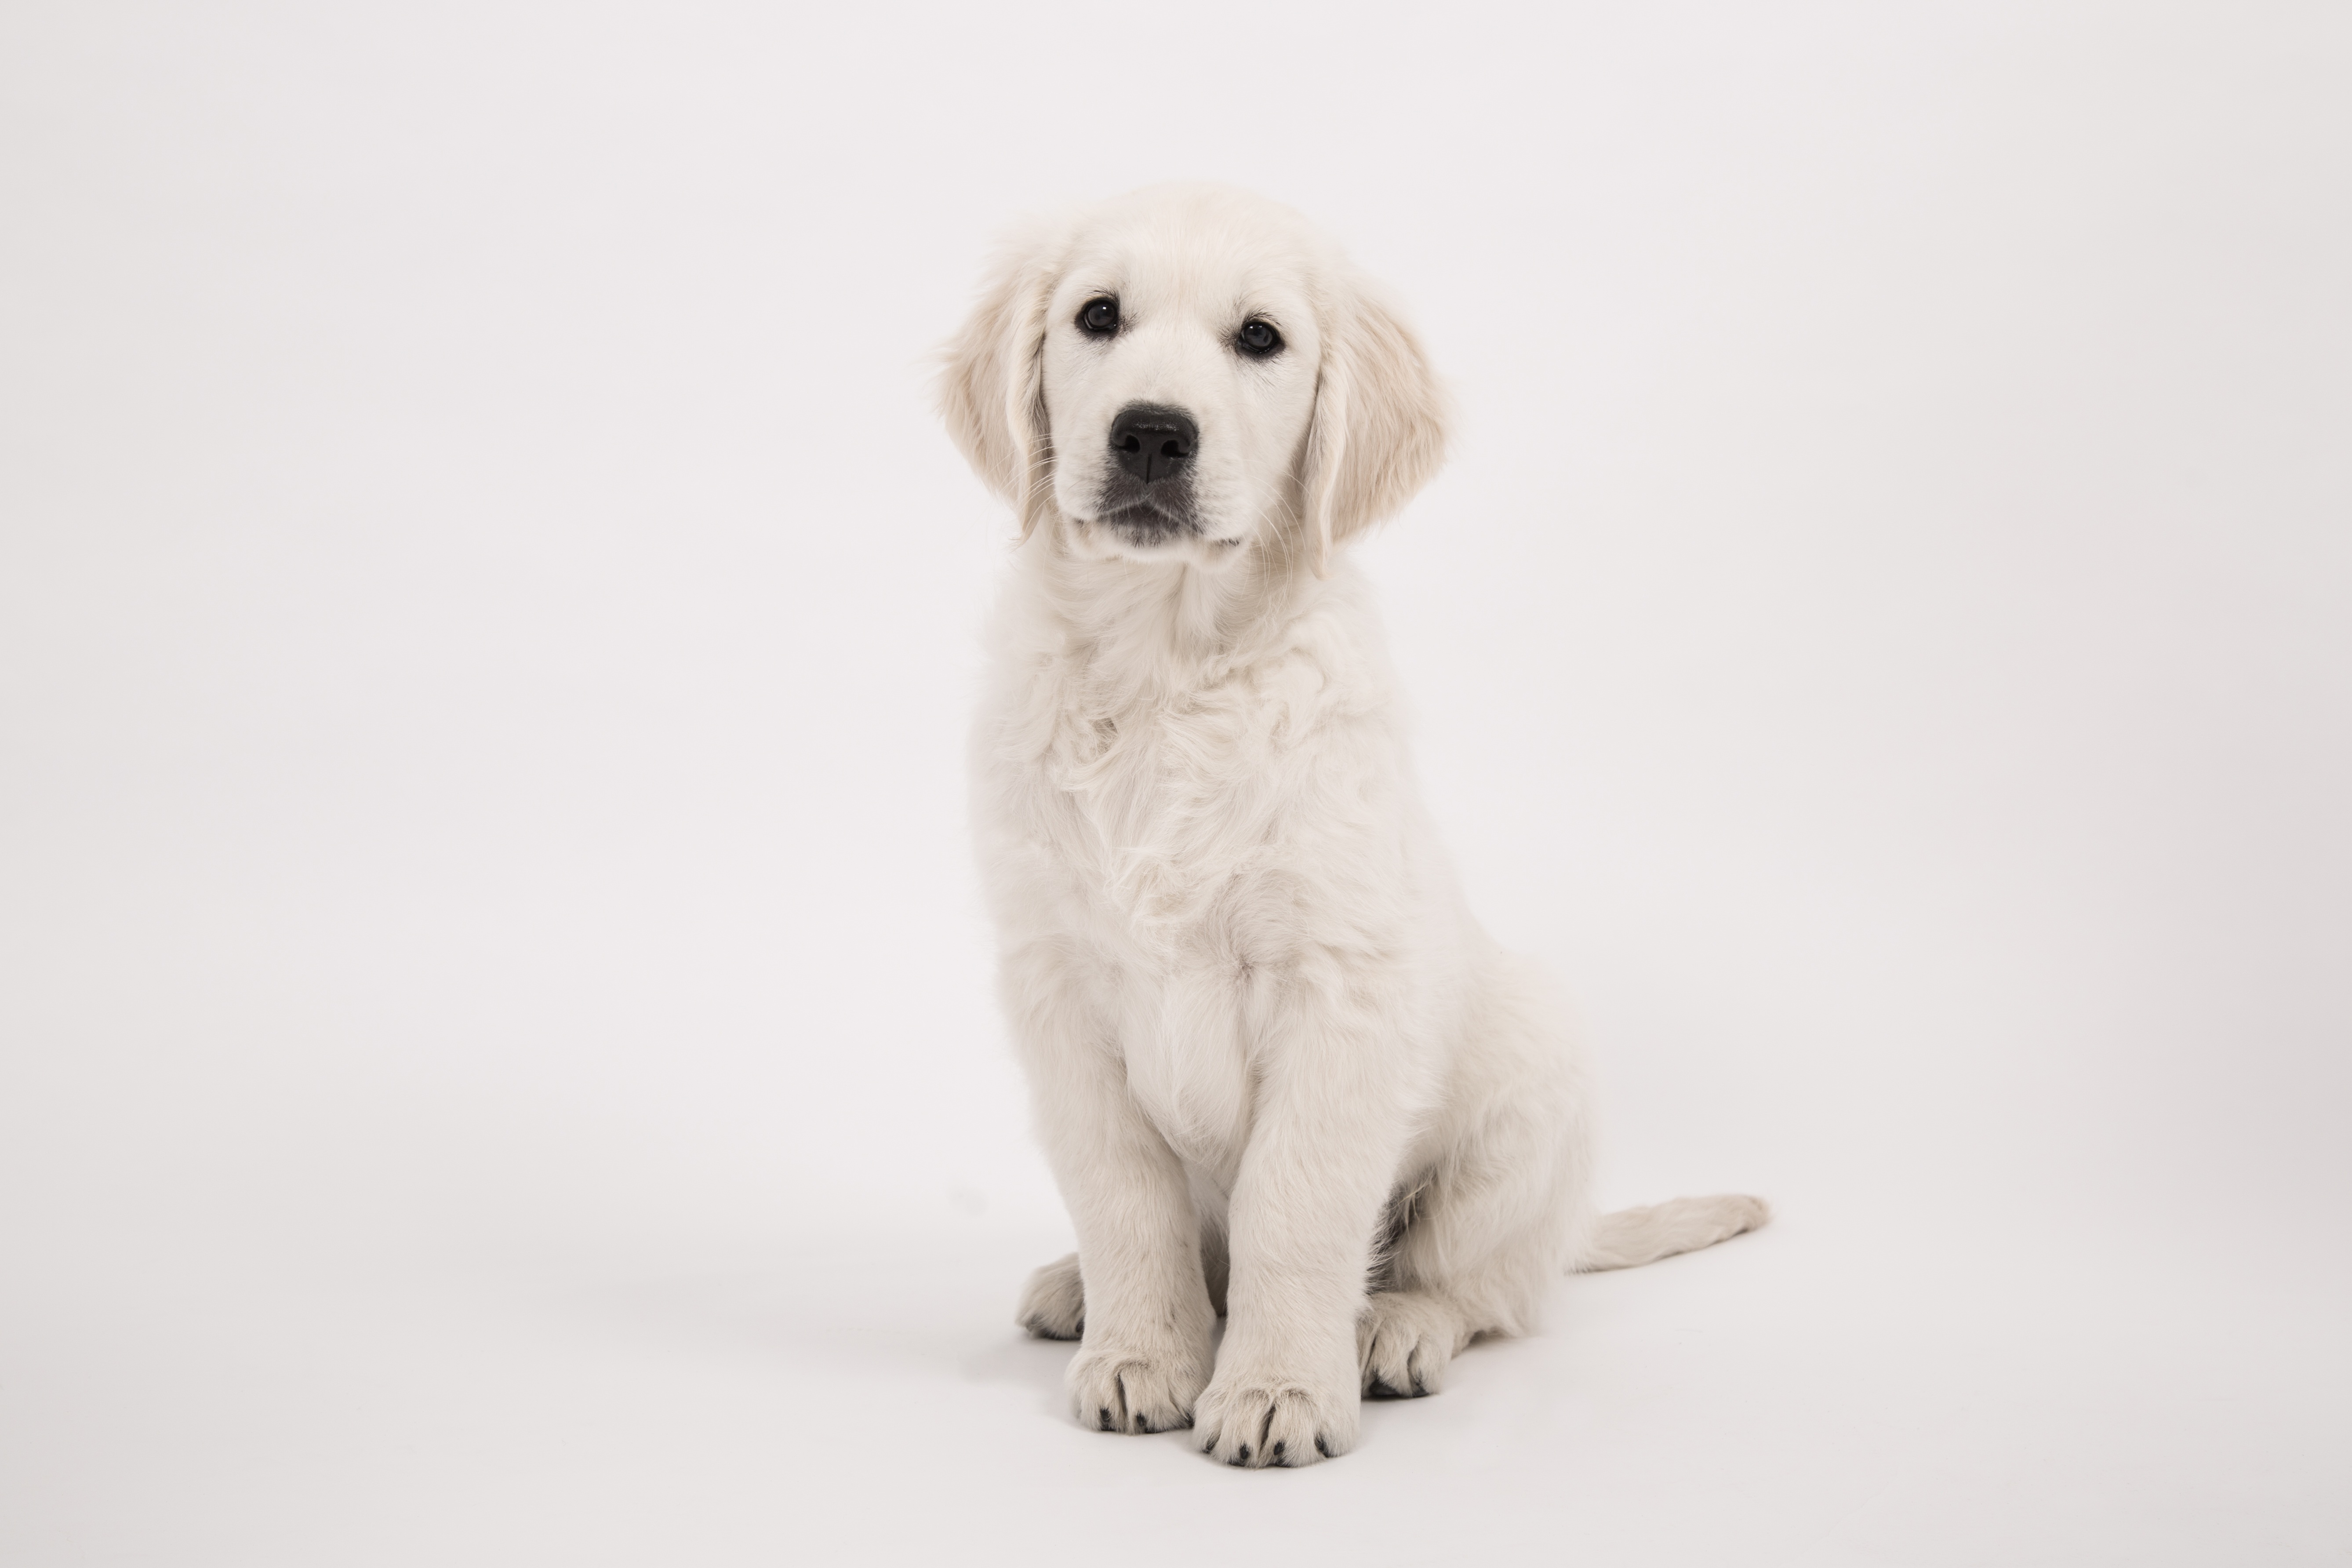 Baby Animal Dog Golden Retriever Pet Puppy Sitting 5351x3567